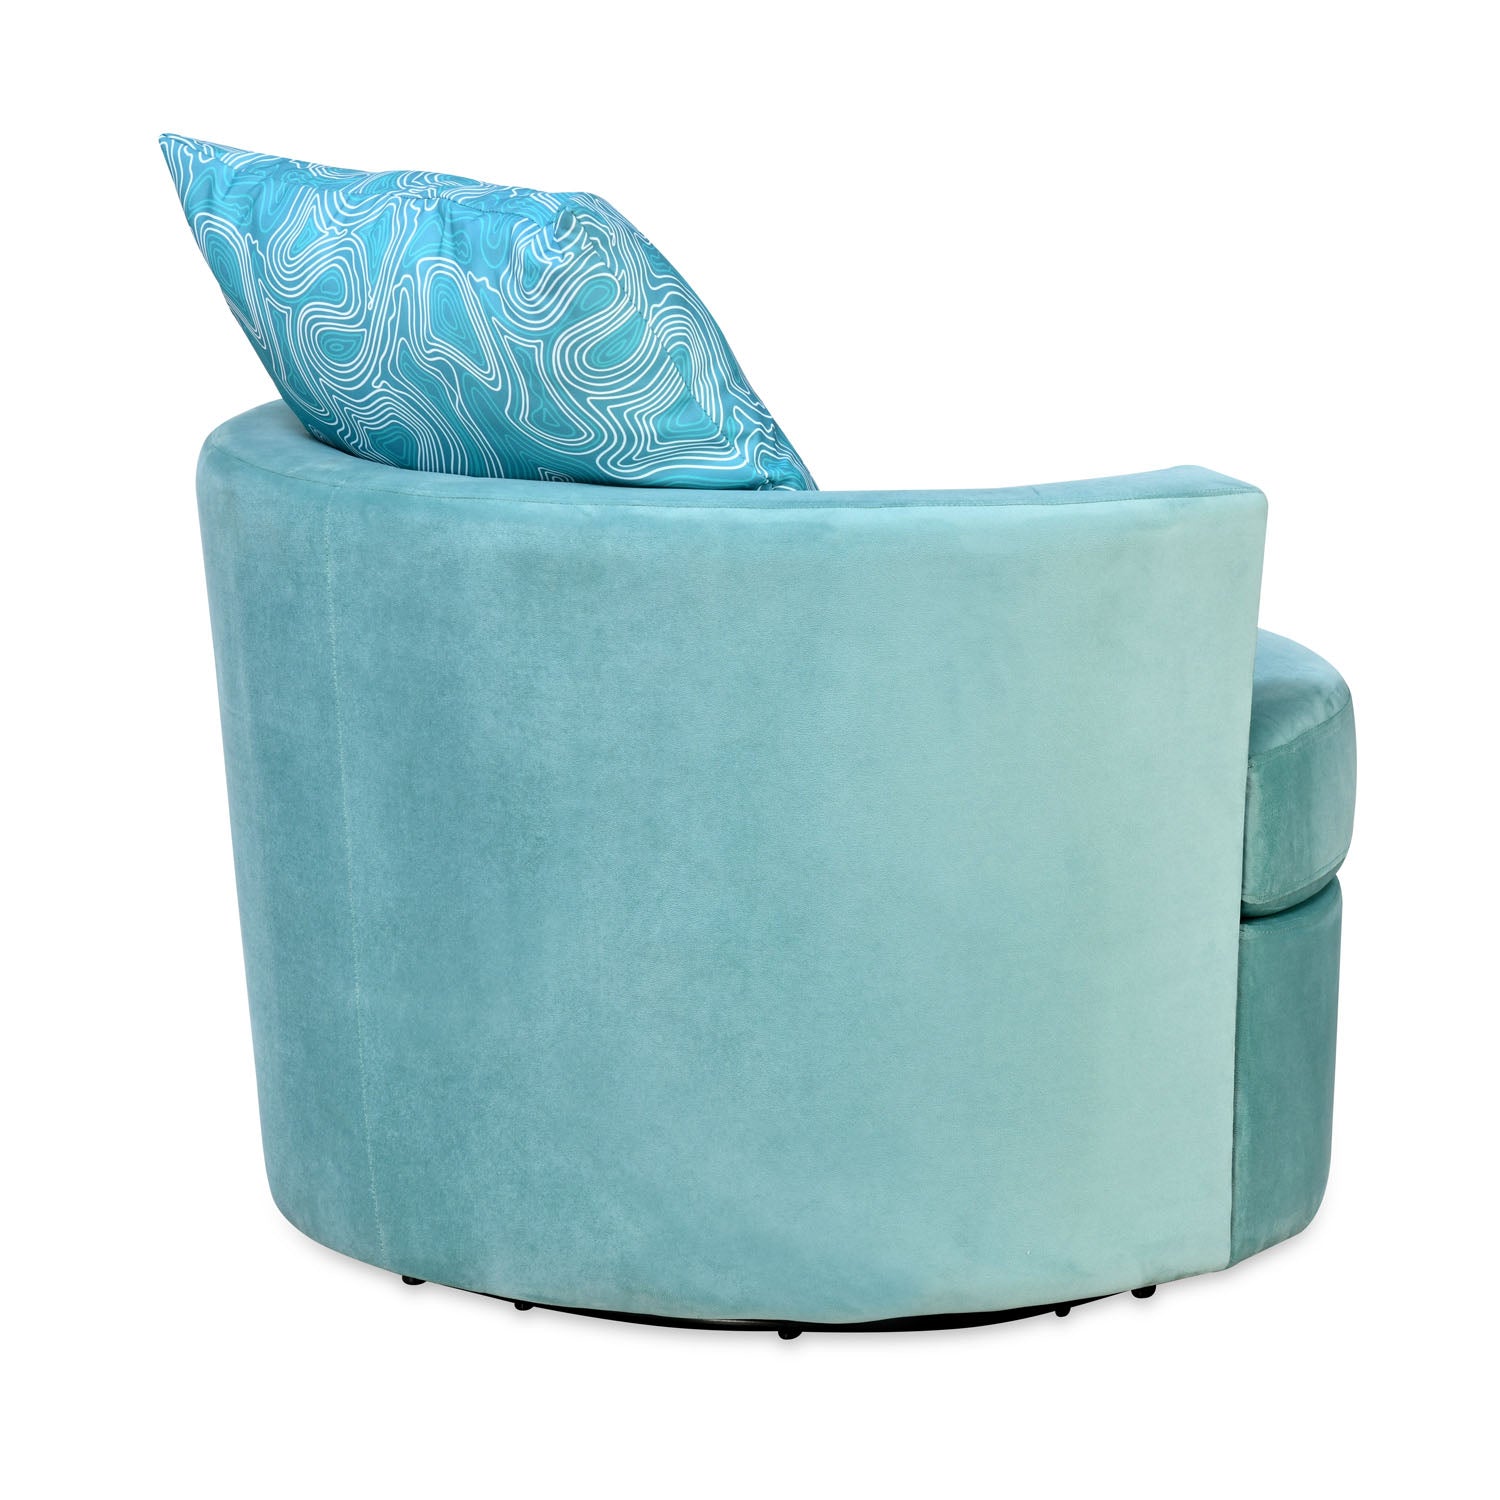 Aquata Fabric Swivel Arm Chair (Aqua Blue)